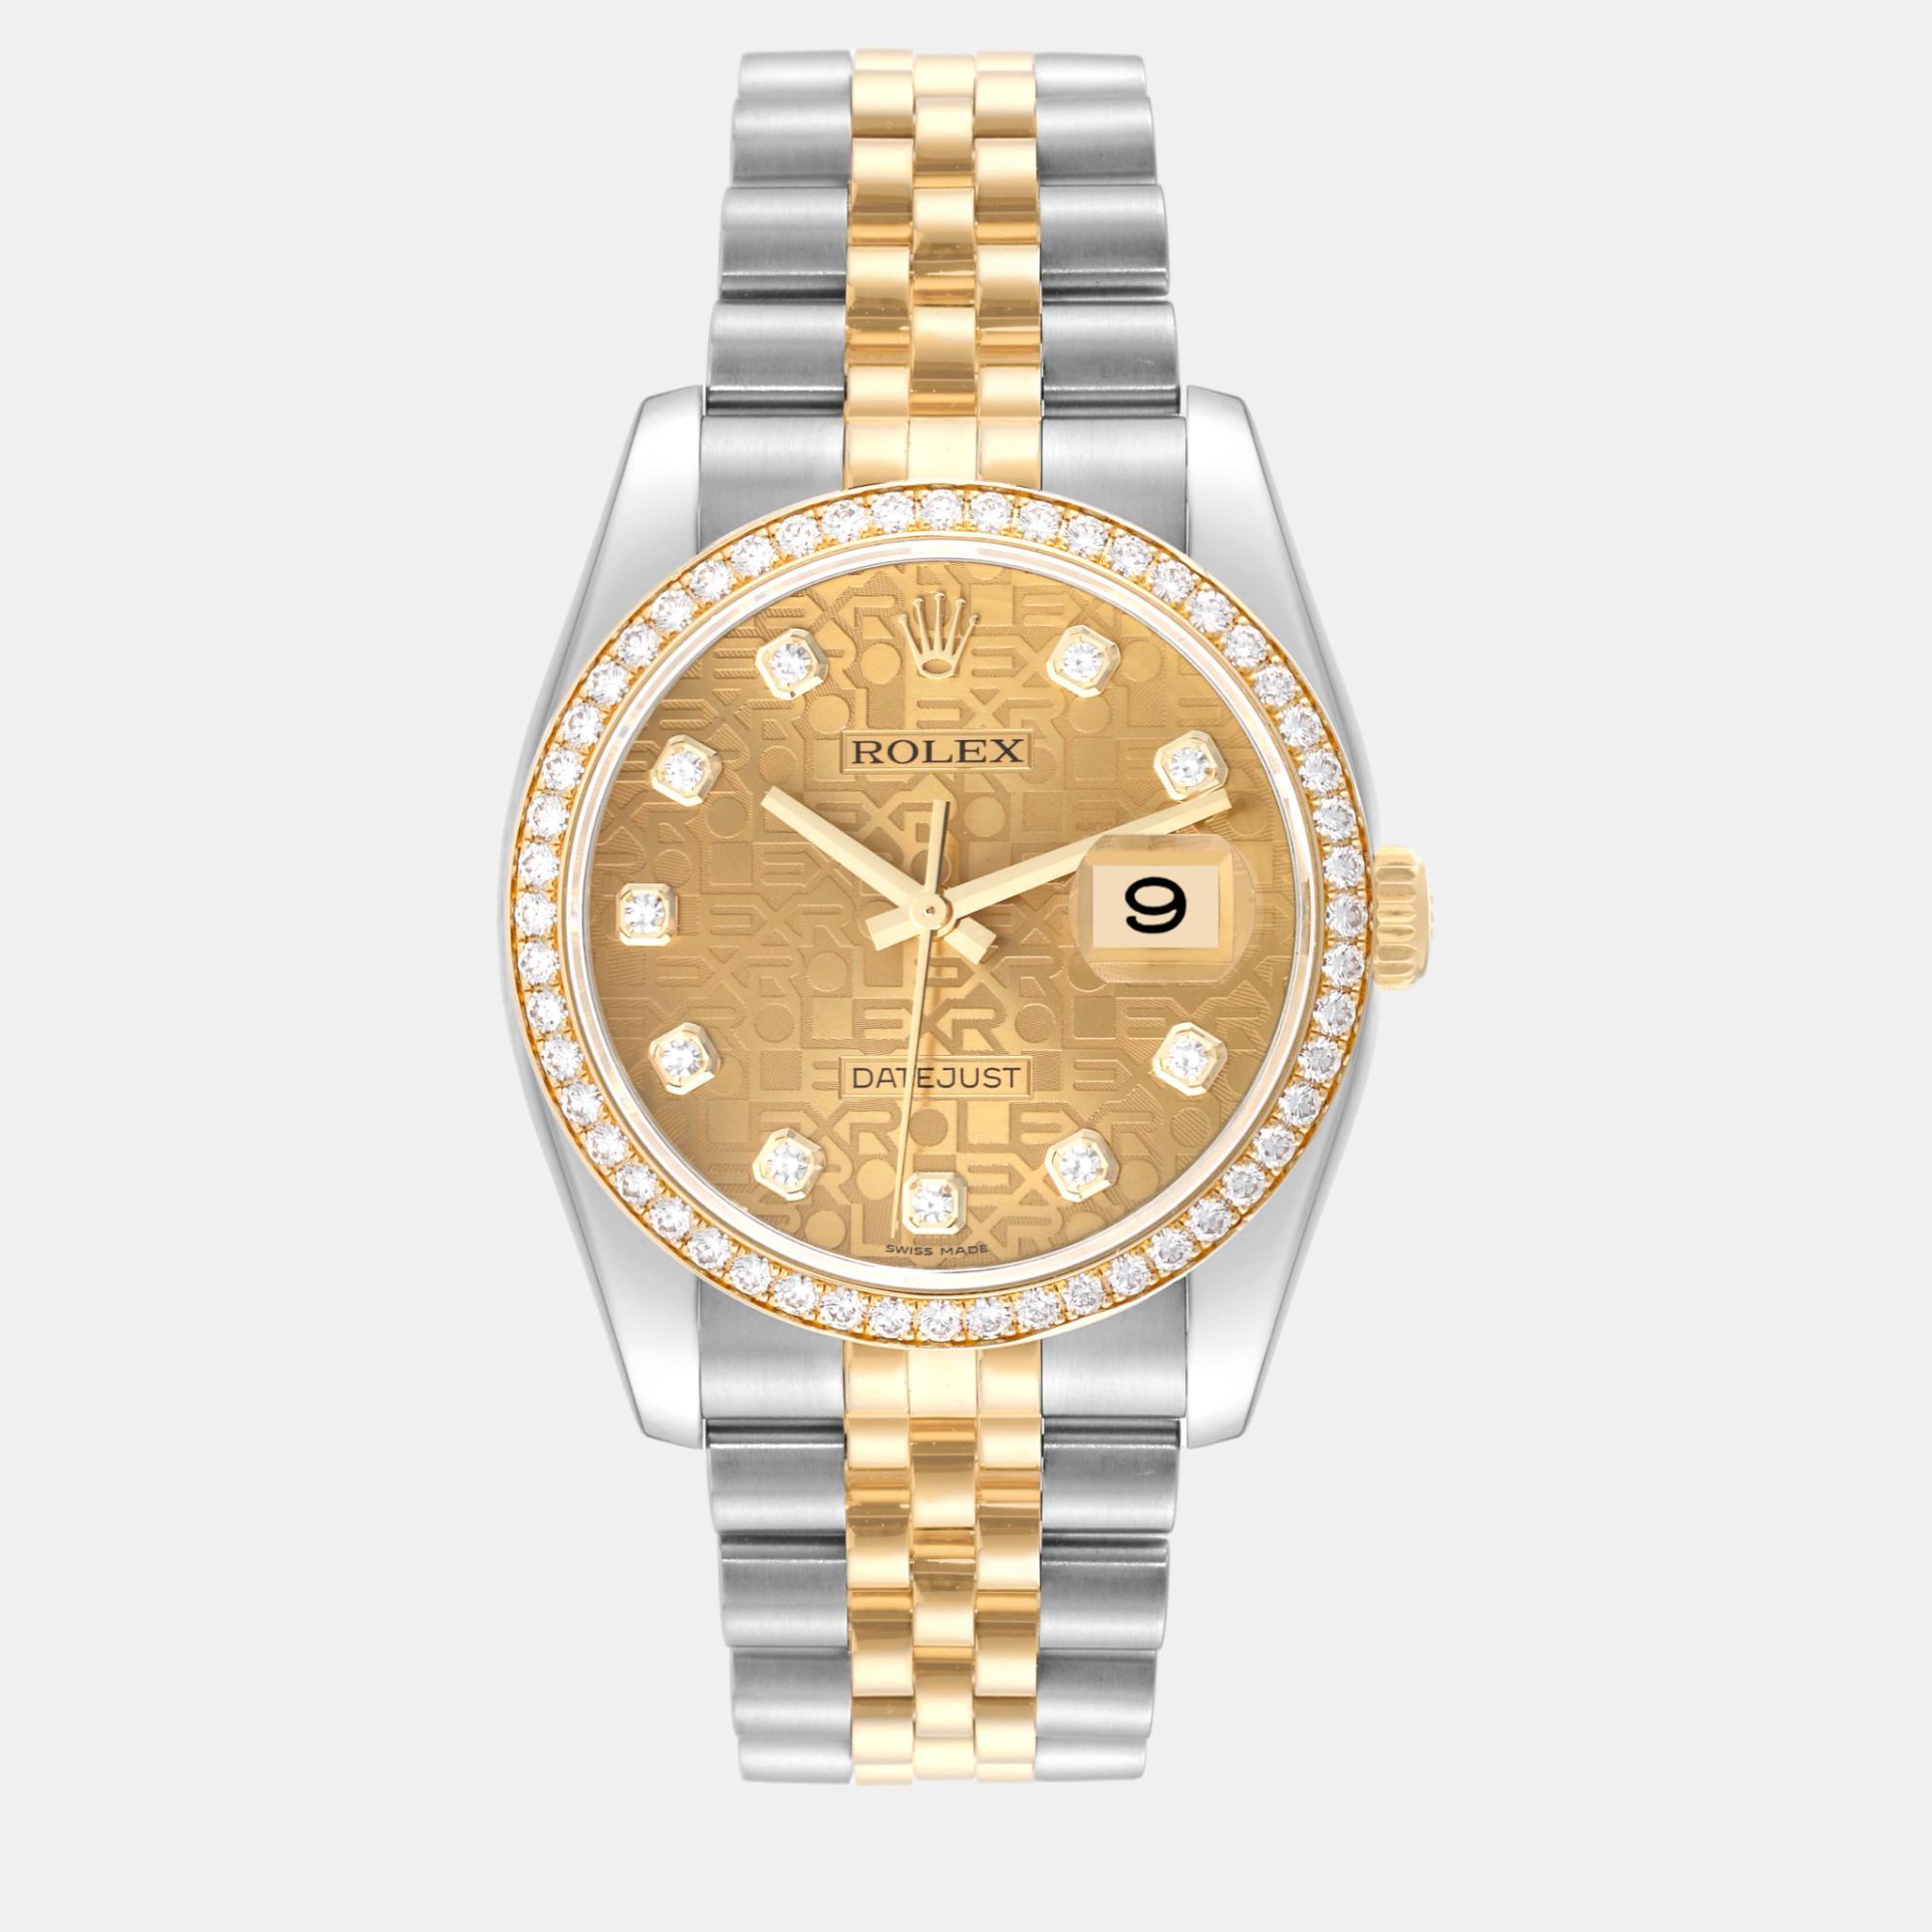 Rolex datejust champagne dial steel yellow gold diamond men's watch 36.0 mm